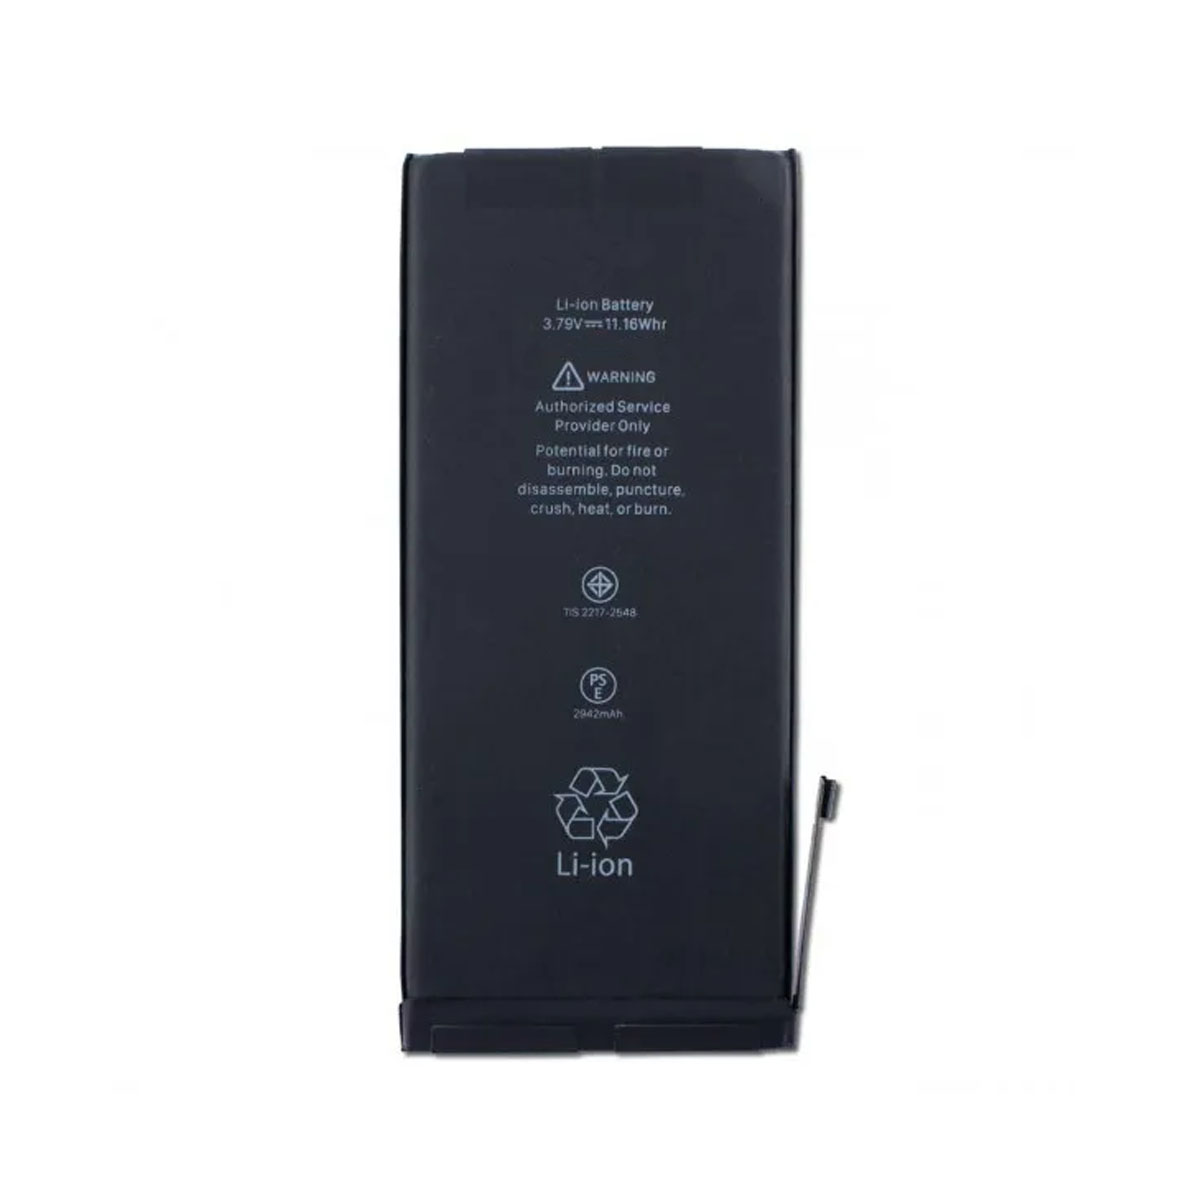 АКБ (Аккумулятор) для APPLE iPhone XR, 2942mAh, цвет черный